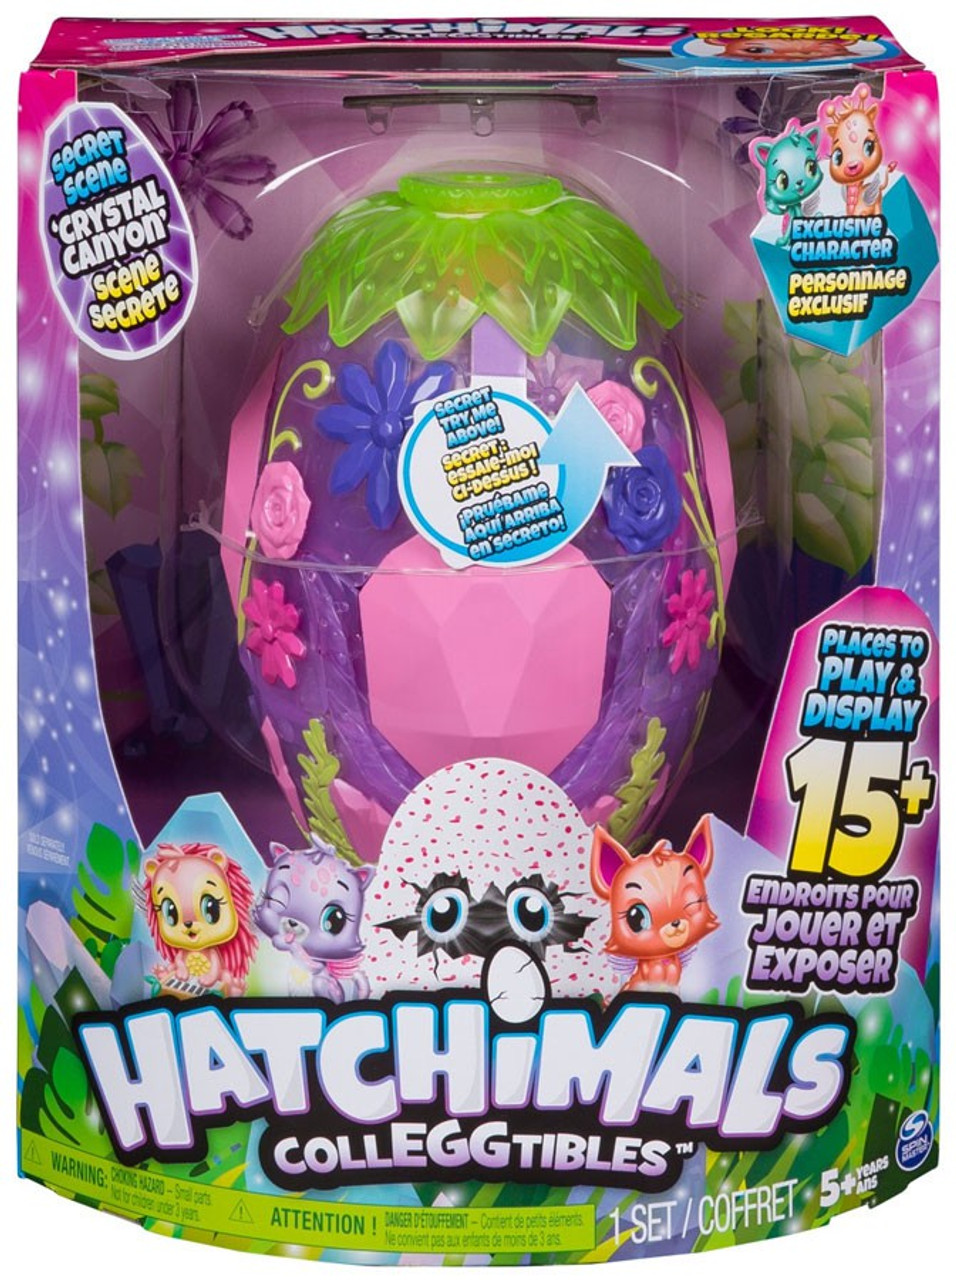 Hatchimals Colleggtibles Secret Scene Crystal Canyon Playset Spin Master Toywiz - pop peeps hangout roblox